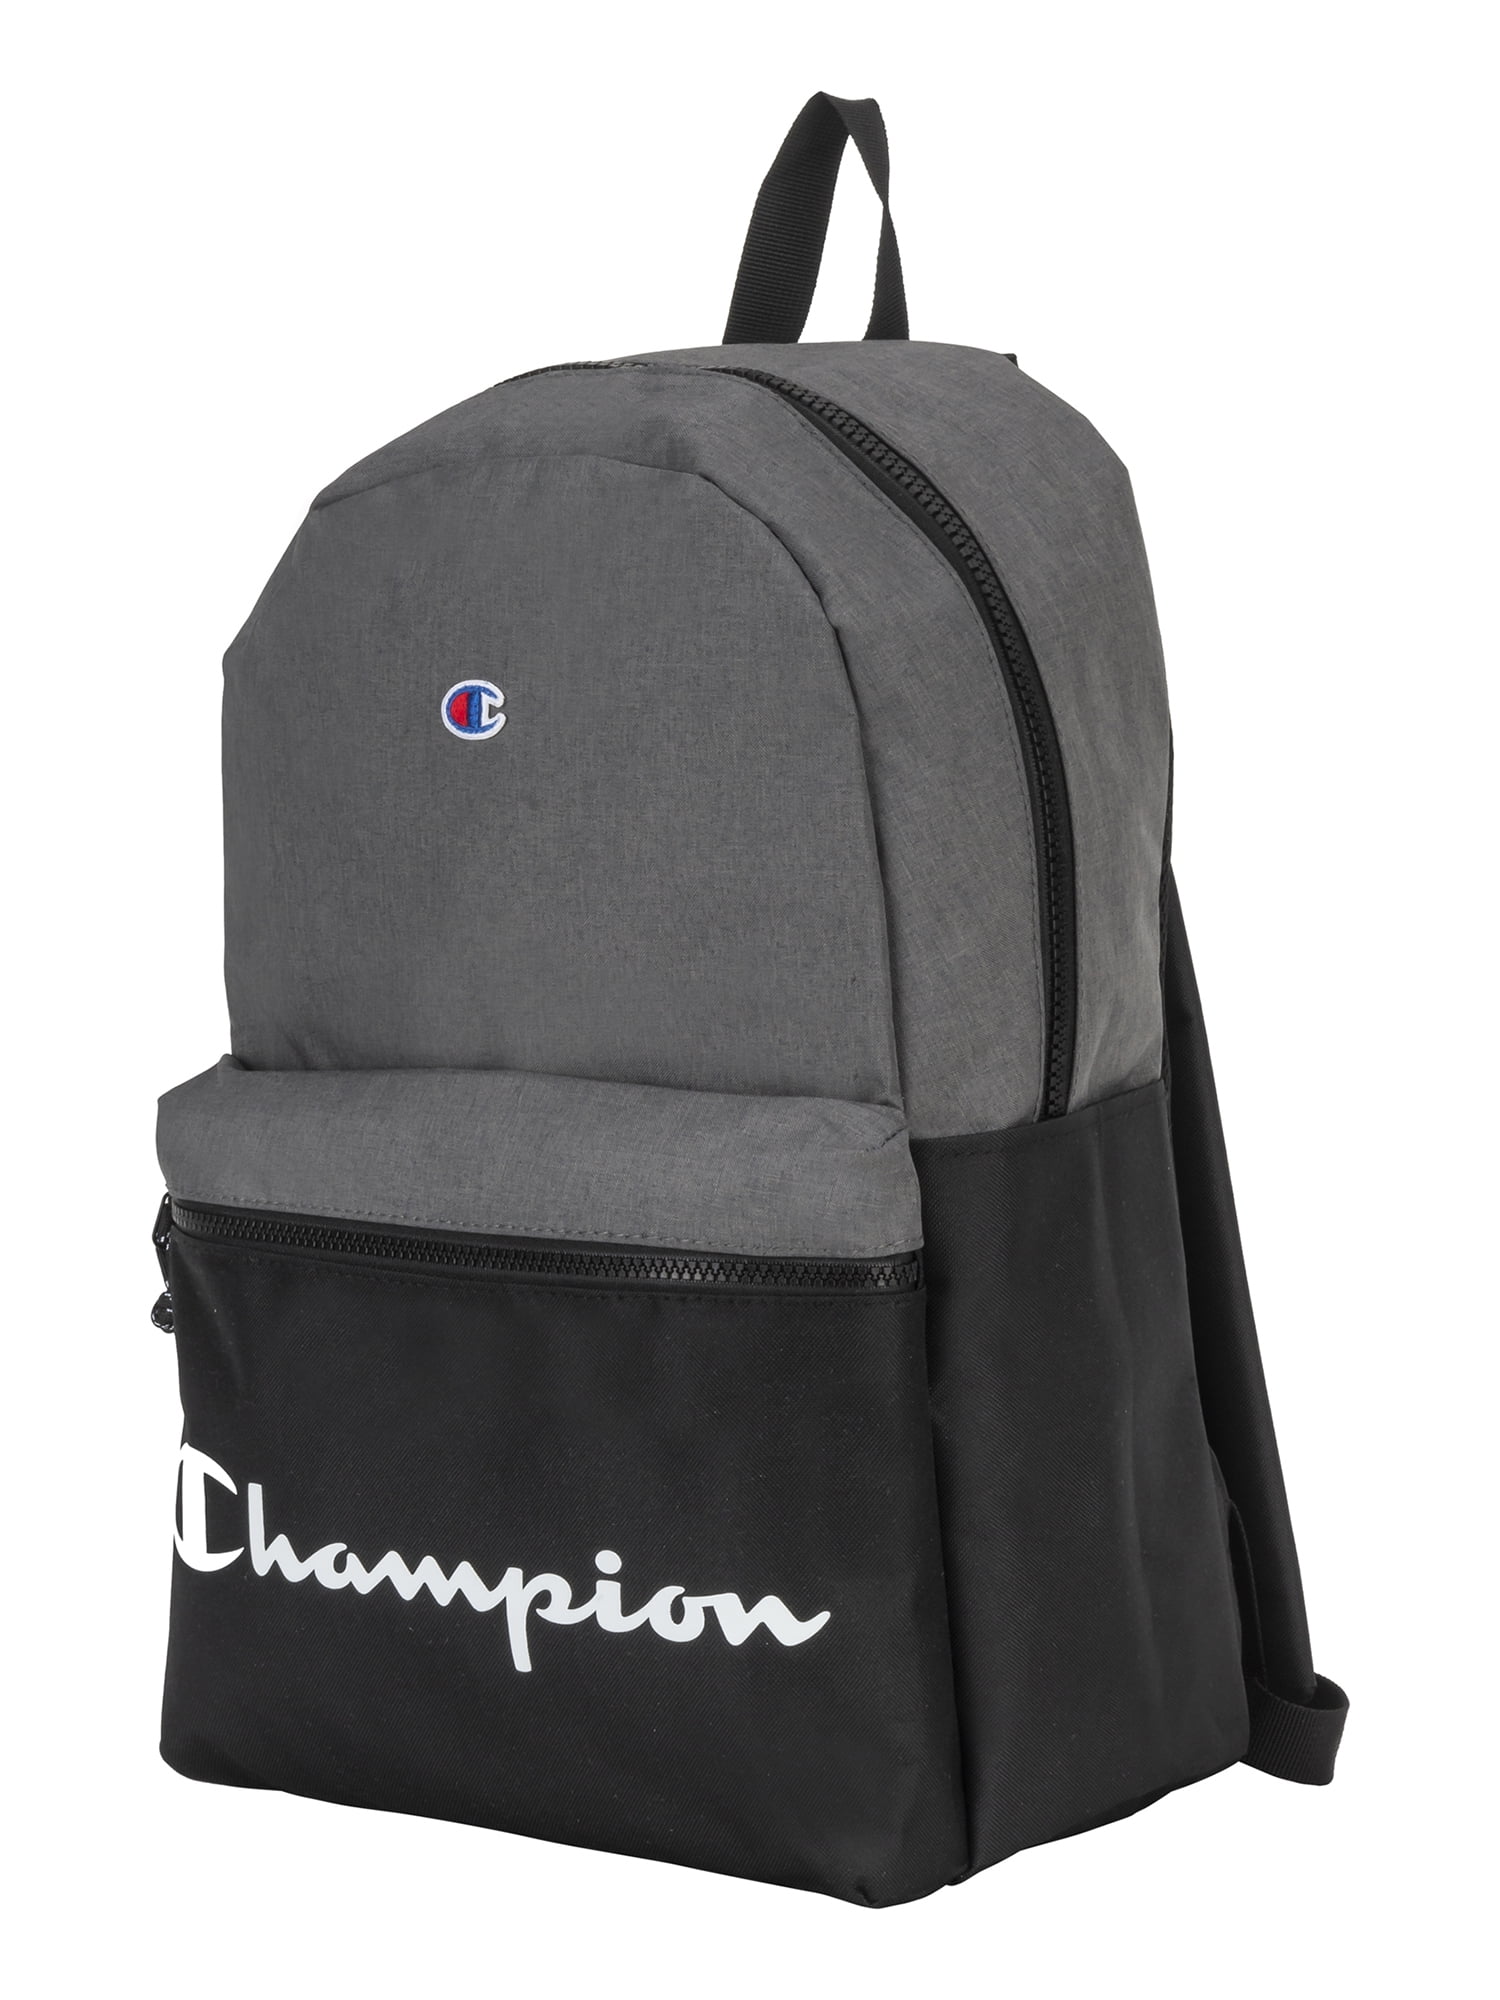 champion backpack walmart